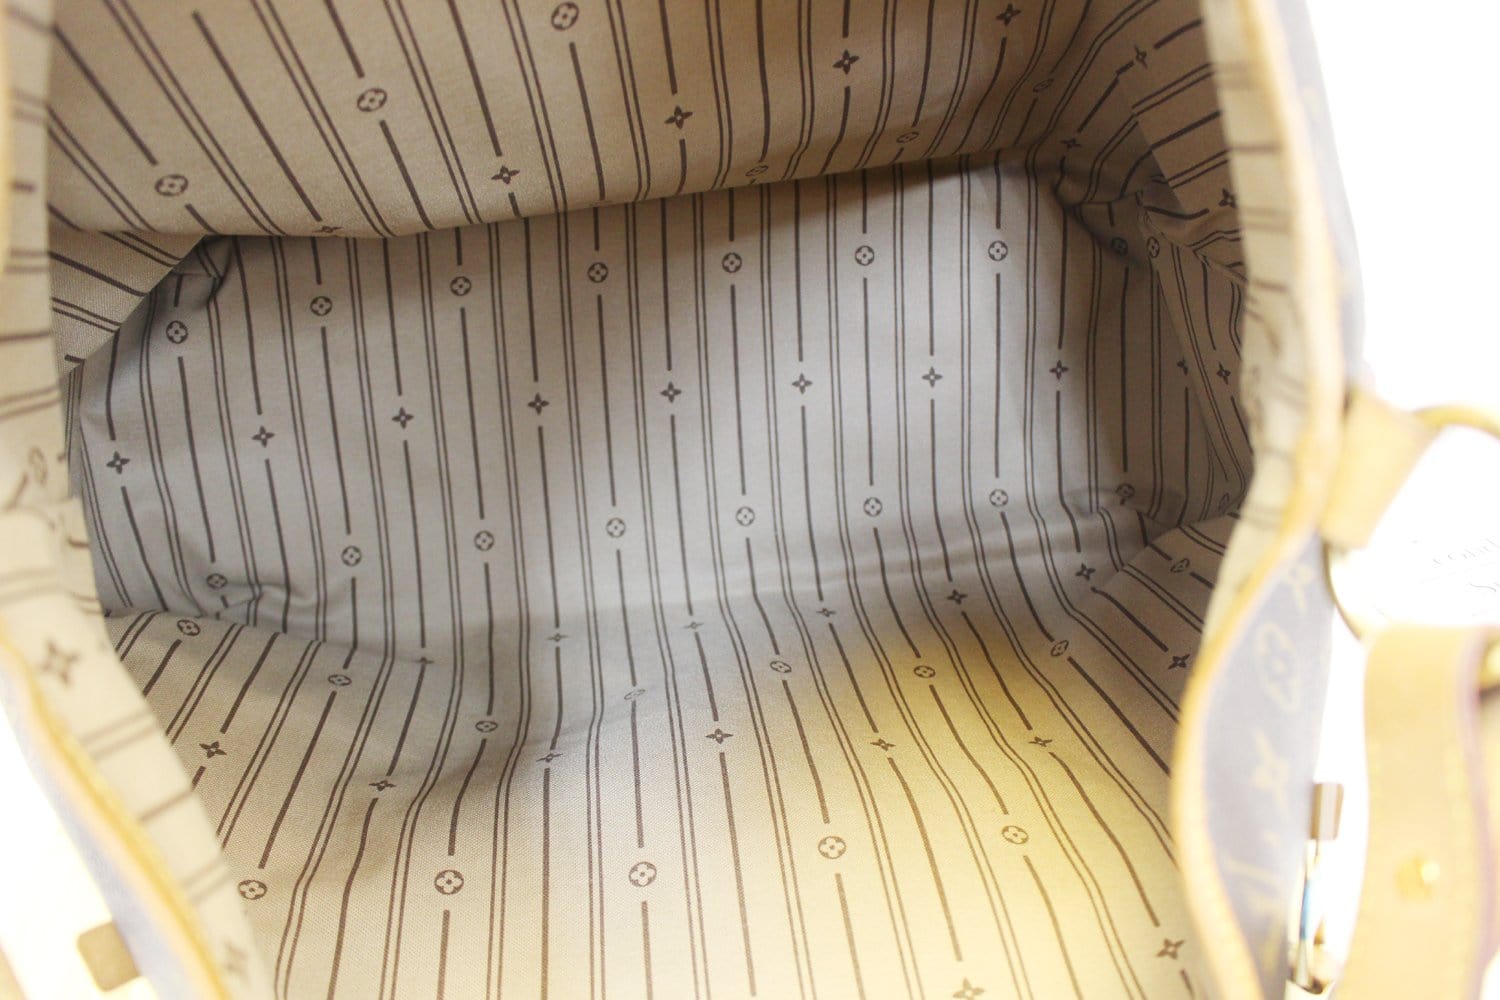 Louis Vuitton Delightful GM Monogram Large Handbag Shoulder Bag (SD4180) -  Reetzy